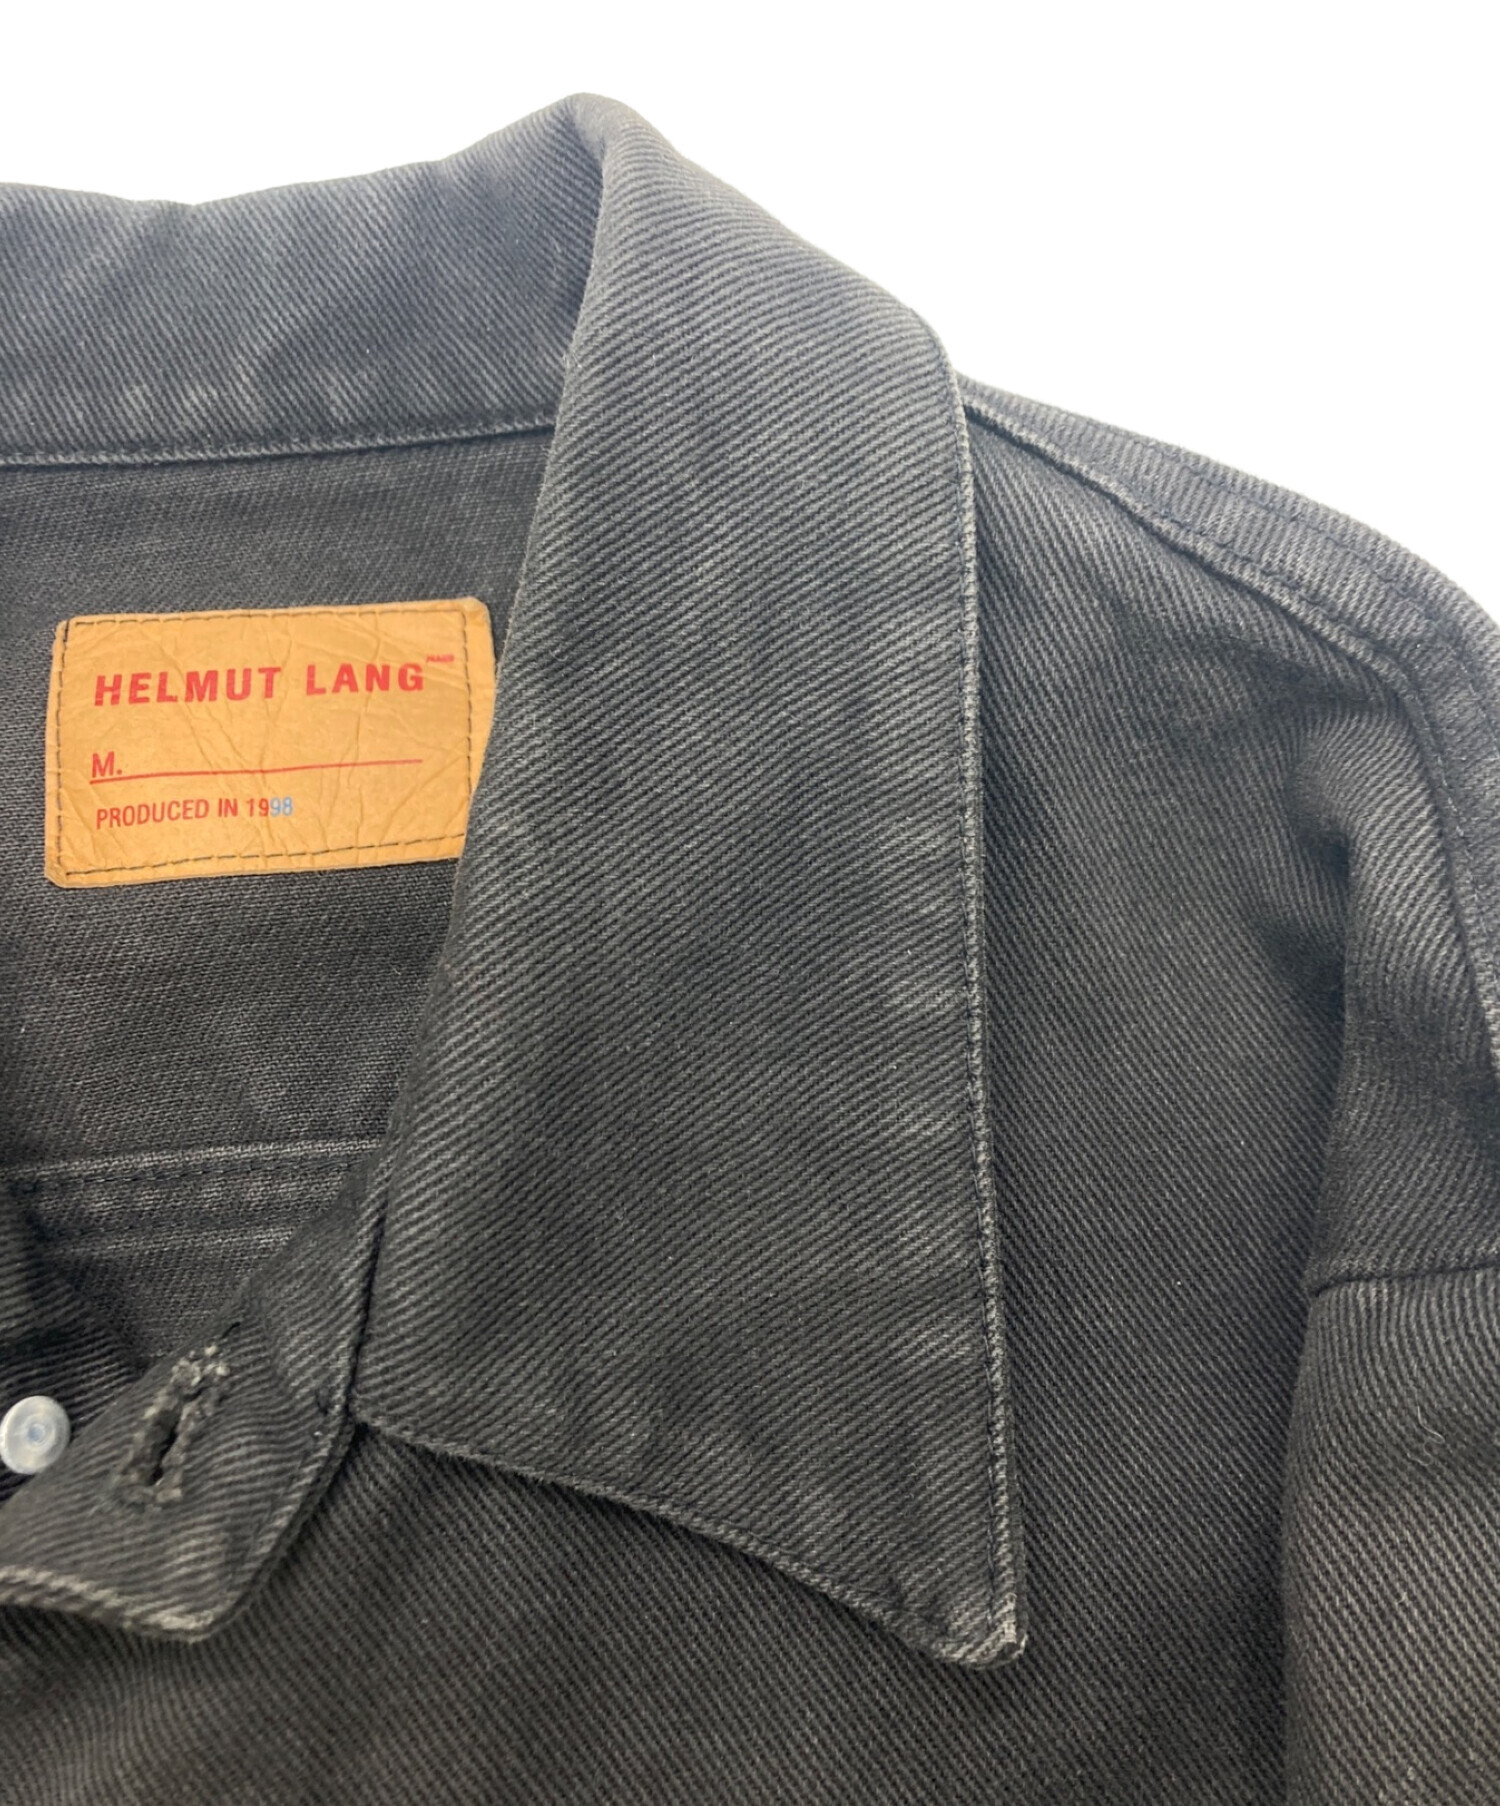 HELMUT LANG (ヘルムートラング) ブラックデニムジャケット ブラック サイズ:46